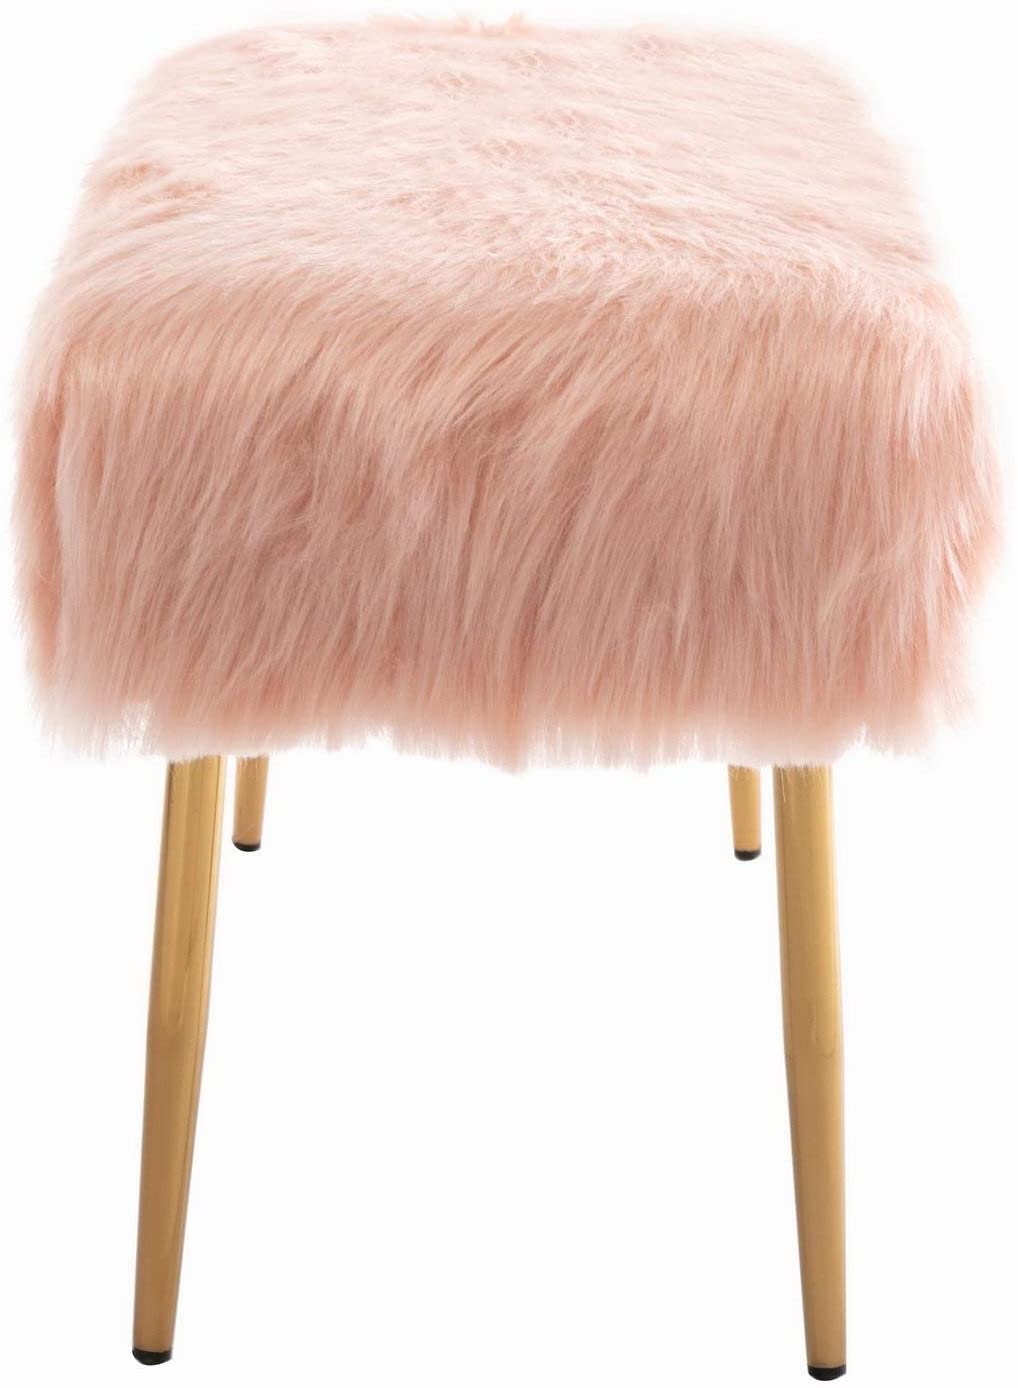 Faux Fur Modern Contemporary Fluffy Bench Gold Metal Legs